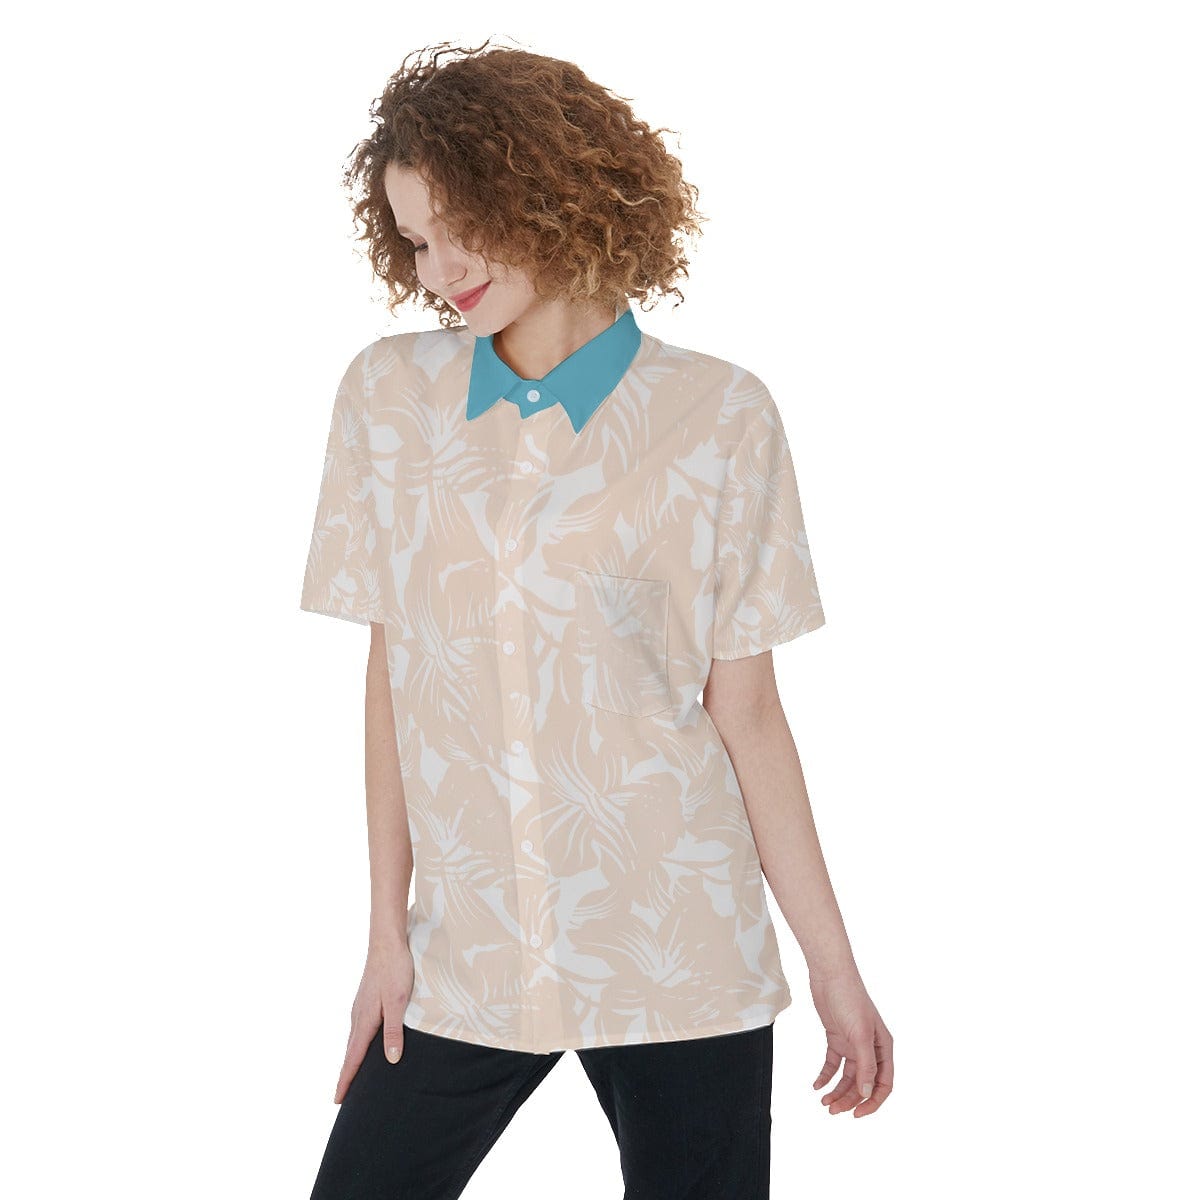 Yoycol Skirt Set 2XL / White Hawaii Blush & Blue - Women's Short Sleeve Shirt With Pocket